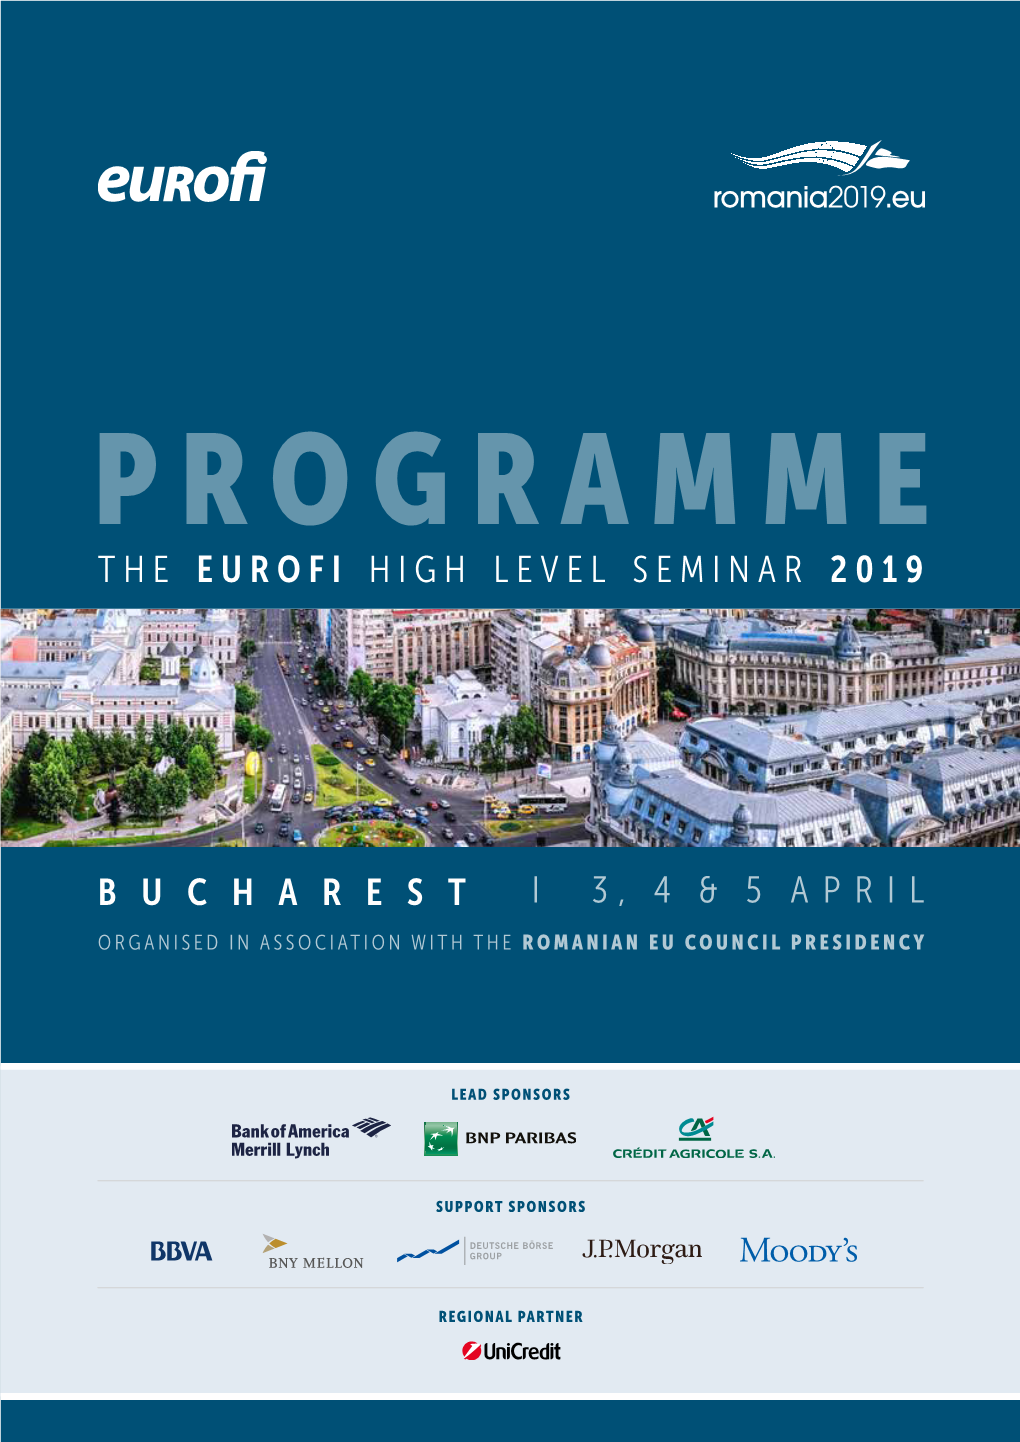 The Eurofi High Level Seminar 2019 I 3, 4 & 5 April B U C H a R E